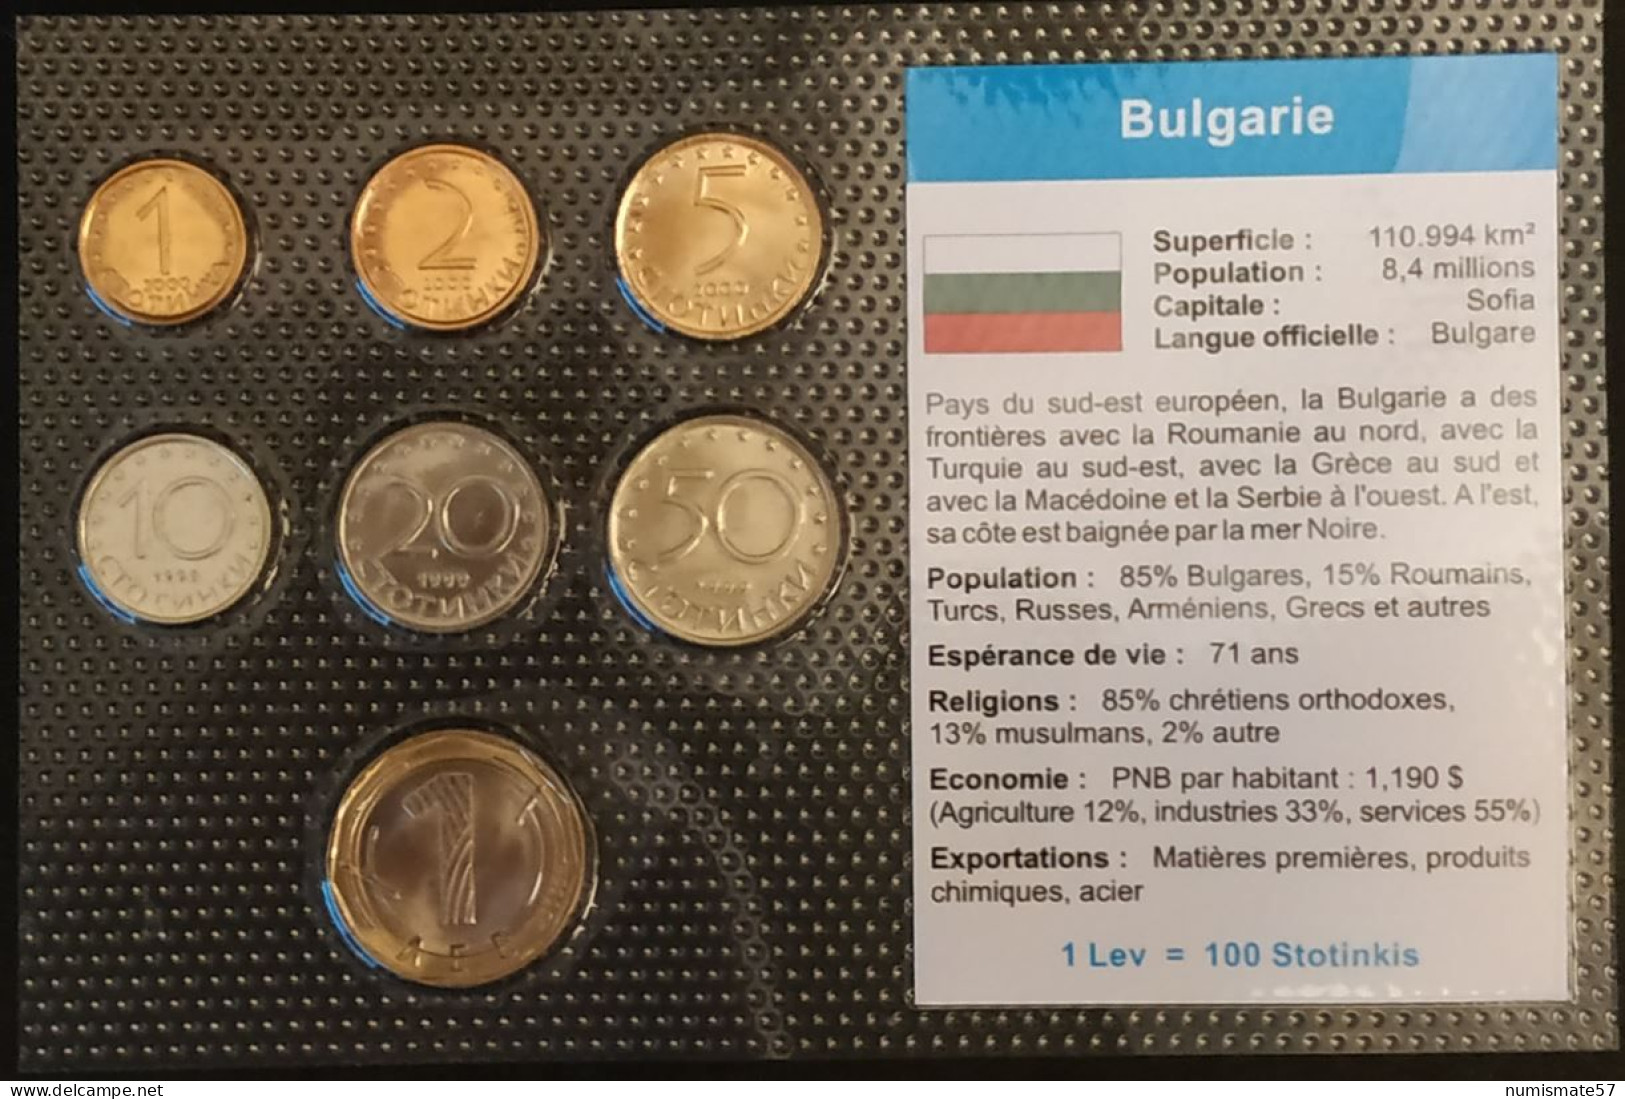 BULGARIE - BULGARIA - SERIE DE 7 PIECES DIFFERENTES - 1 - 2 - 5 - 10 - 20 - 50 STOTINKA - STOTINKI - 1 LEV - Bulgarien